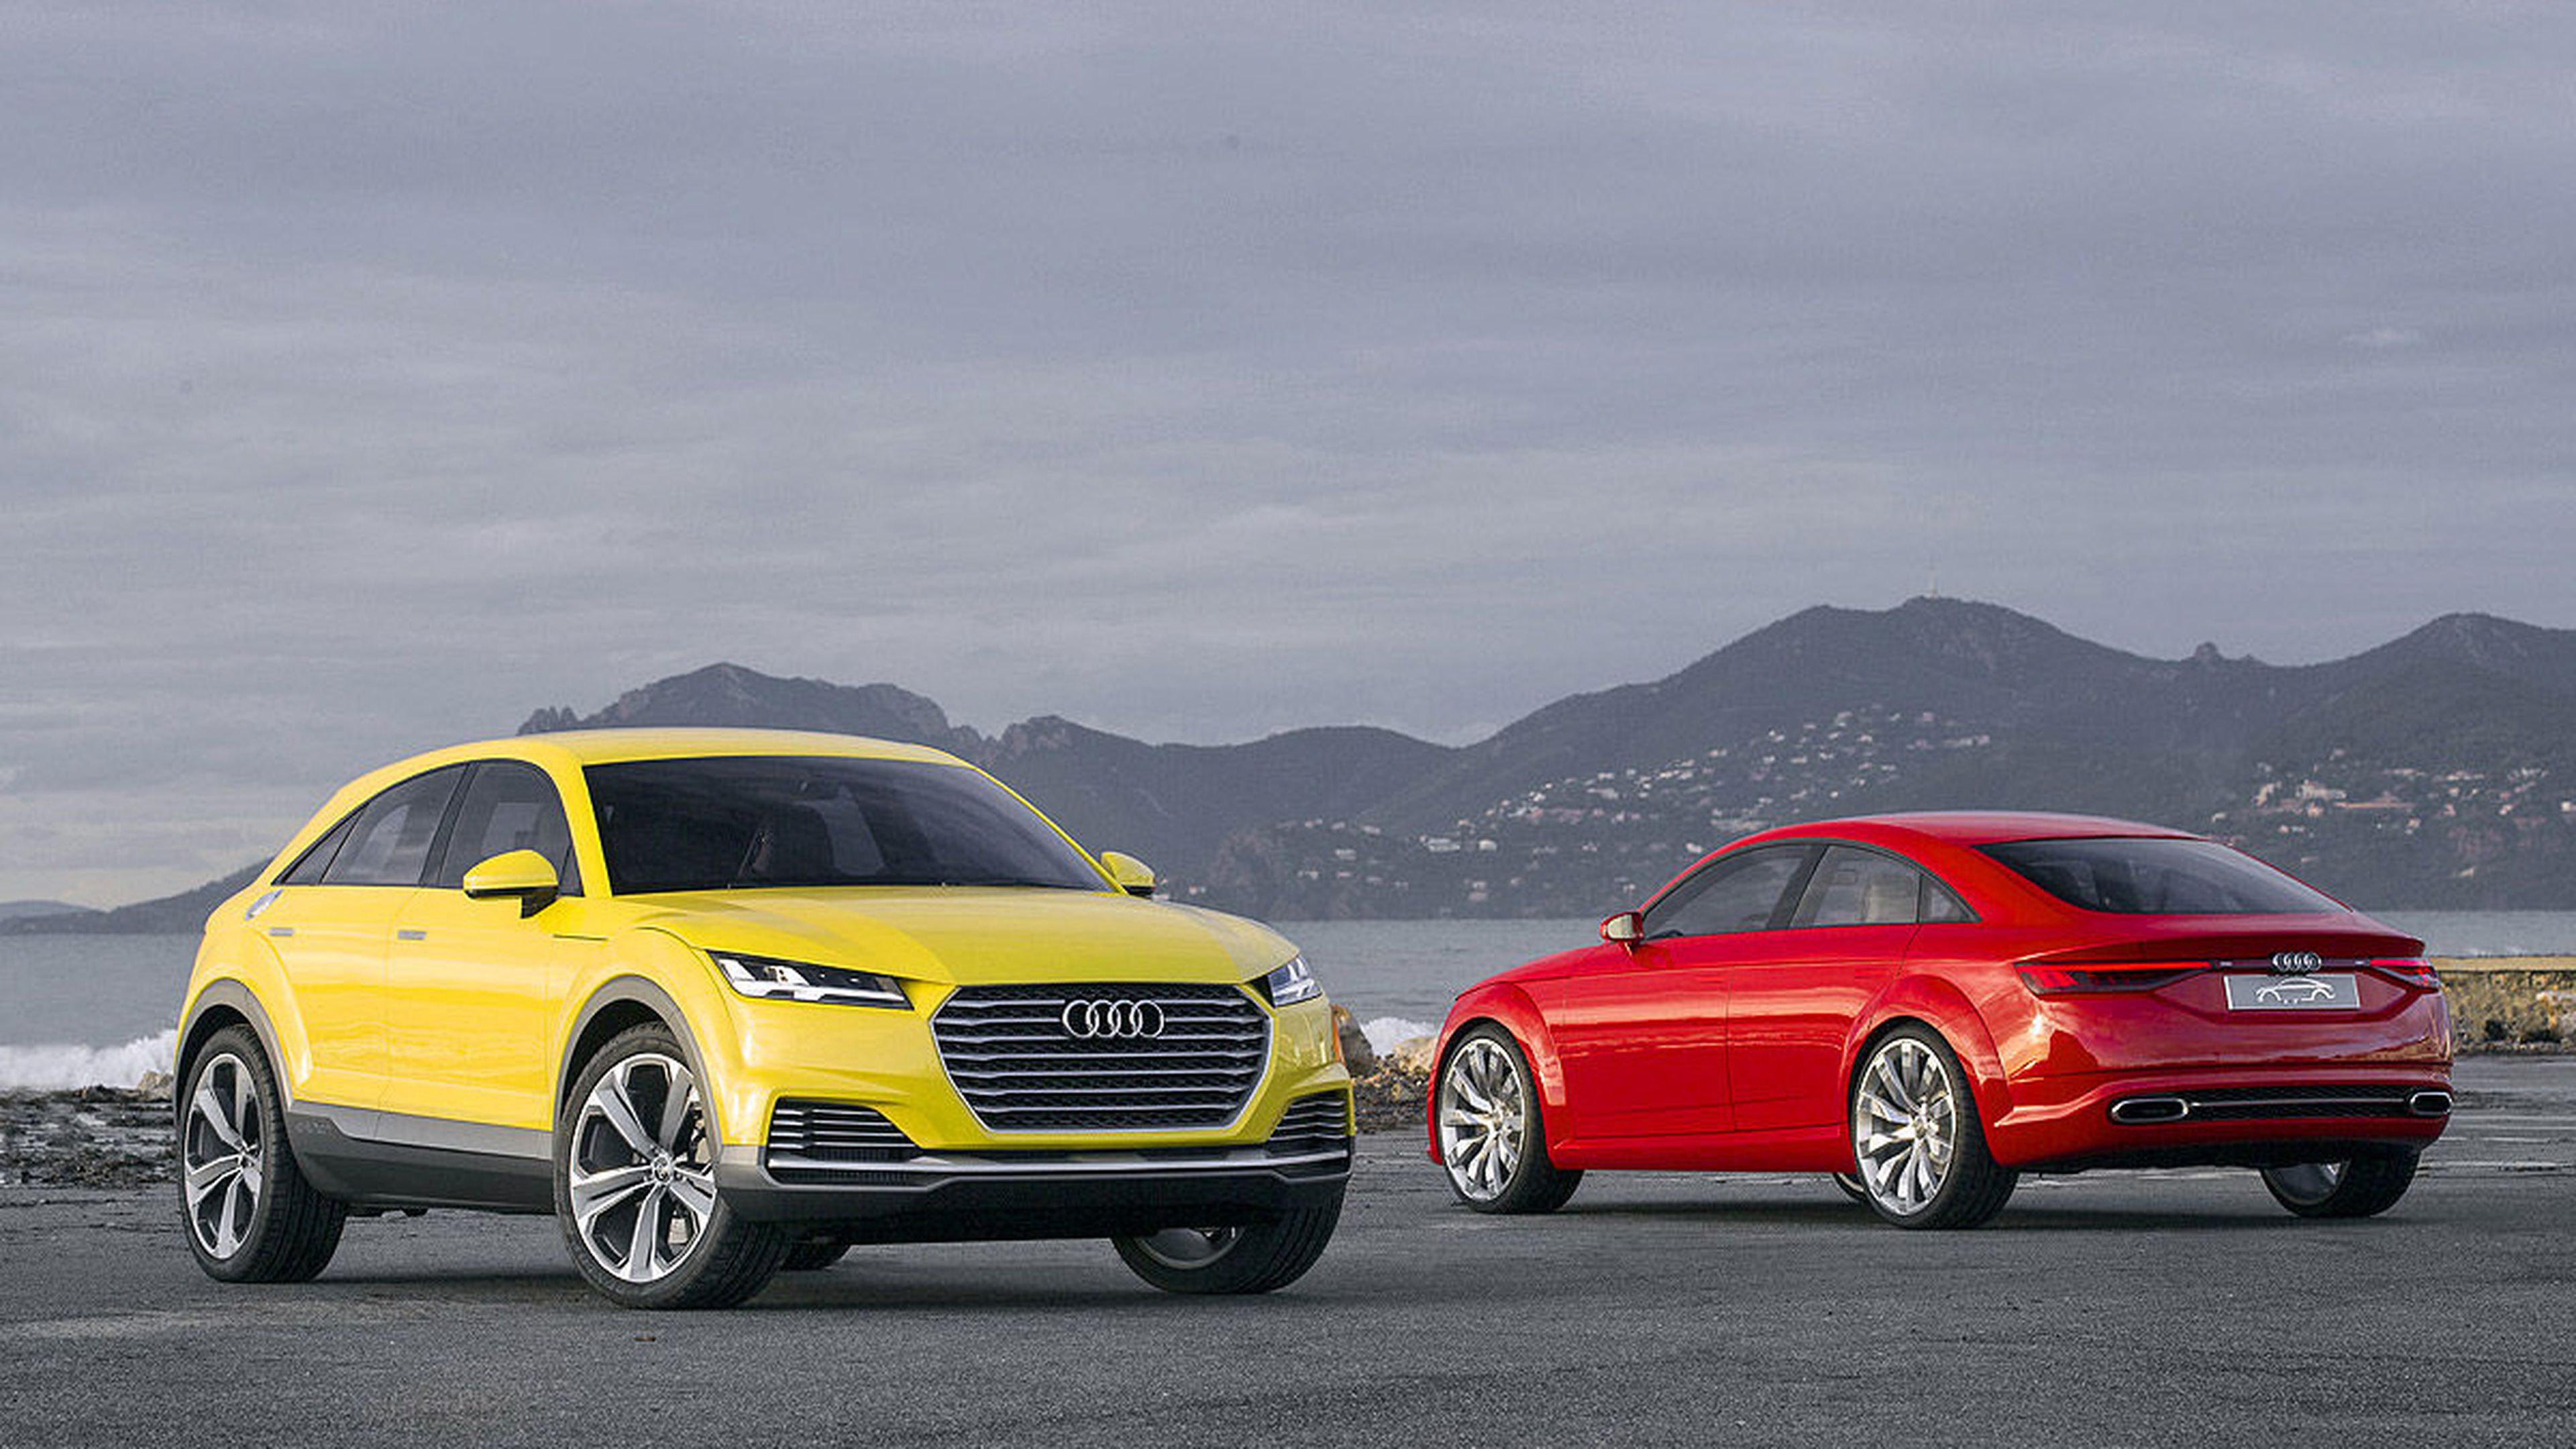 Prueba de prototipos: Audi TT Offroad y Audi TT Sportback